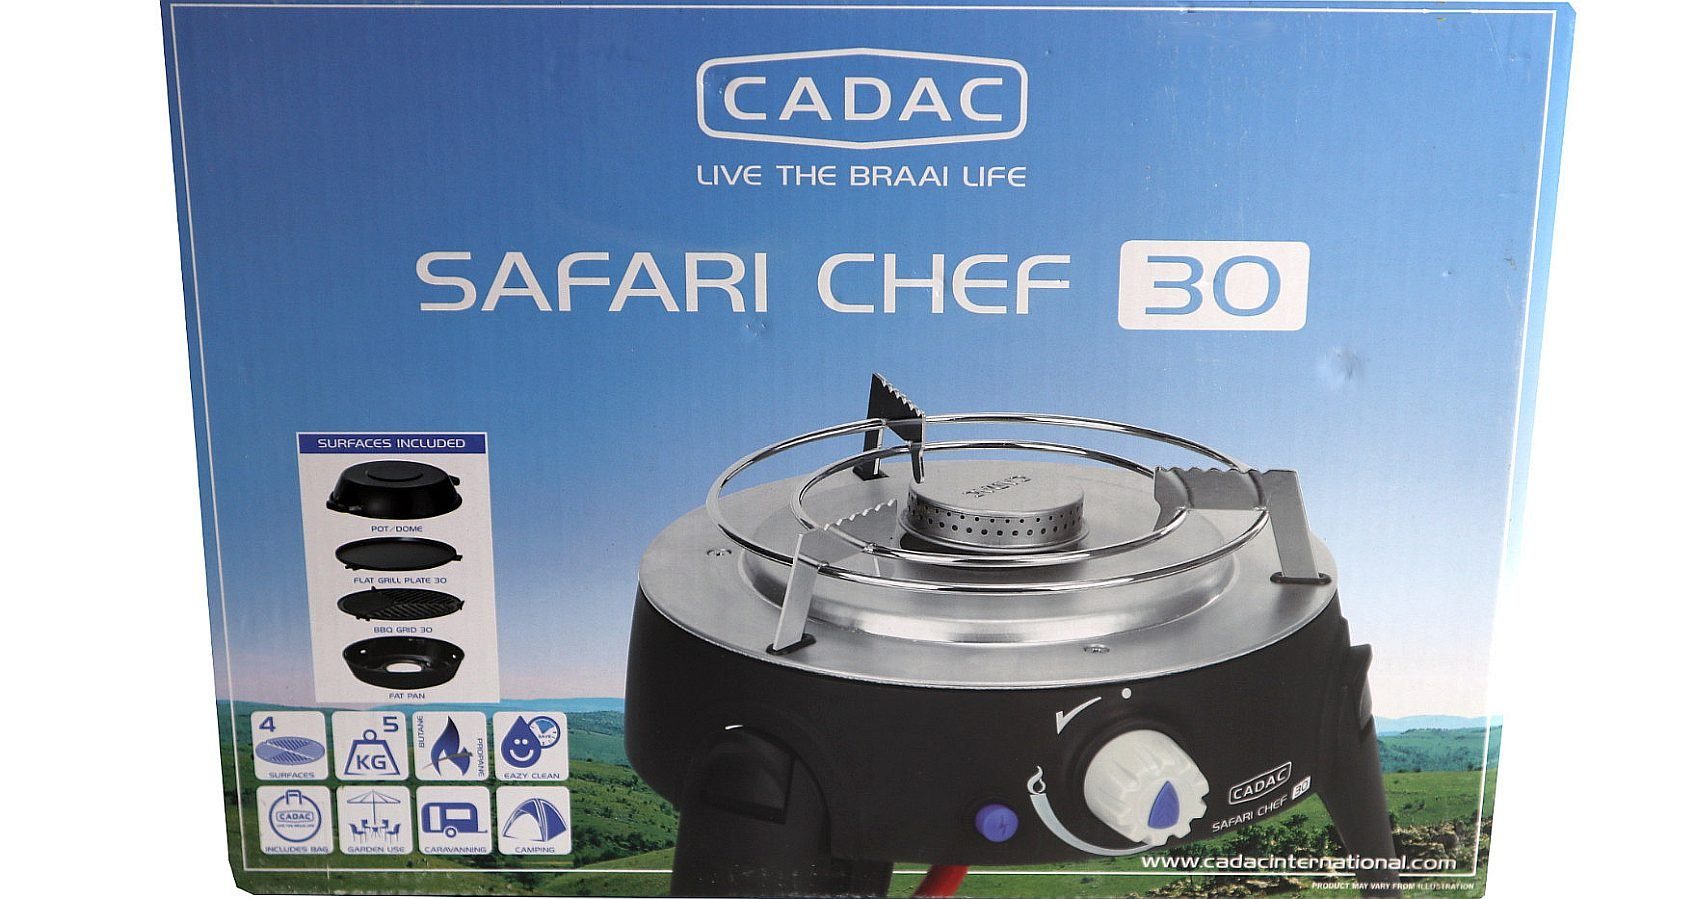 Cadac 5 Grill/Kocher CADAC Chef 30 kg Safari Camping-Gasgrill